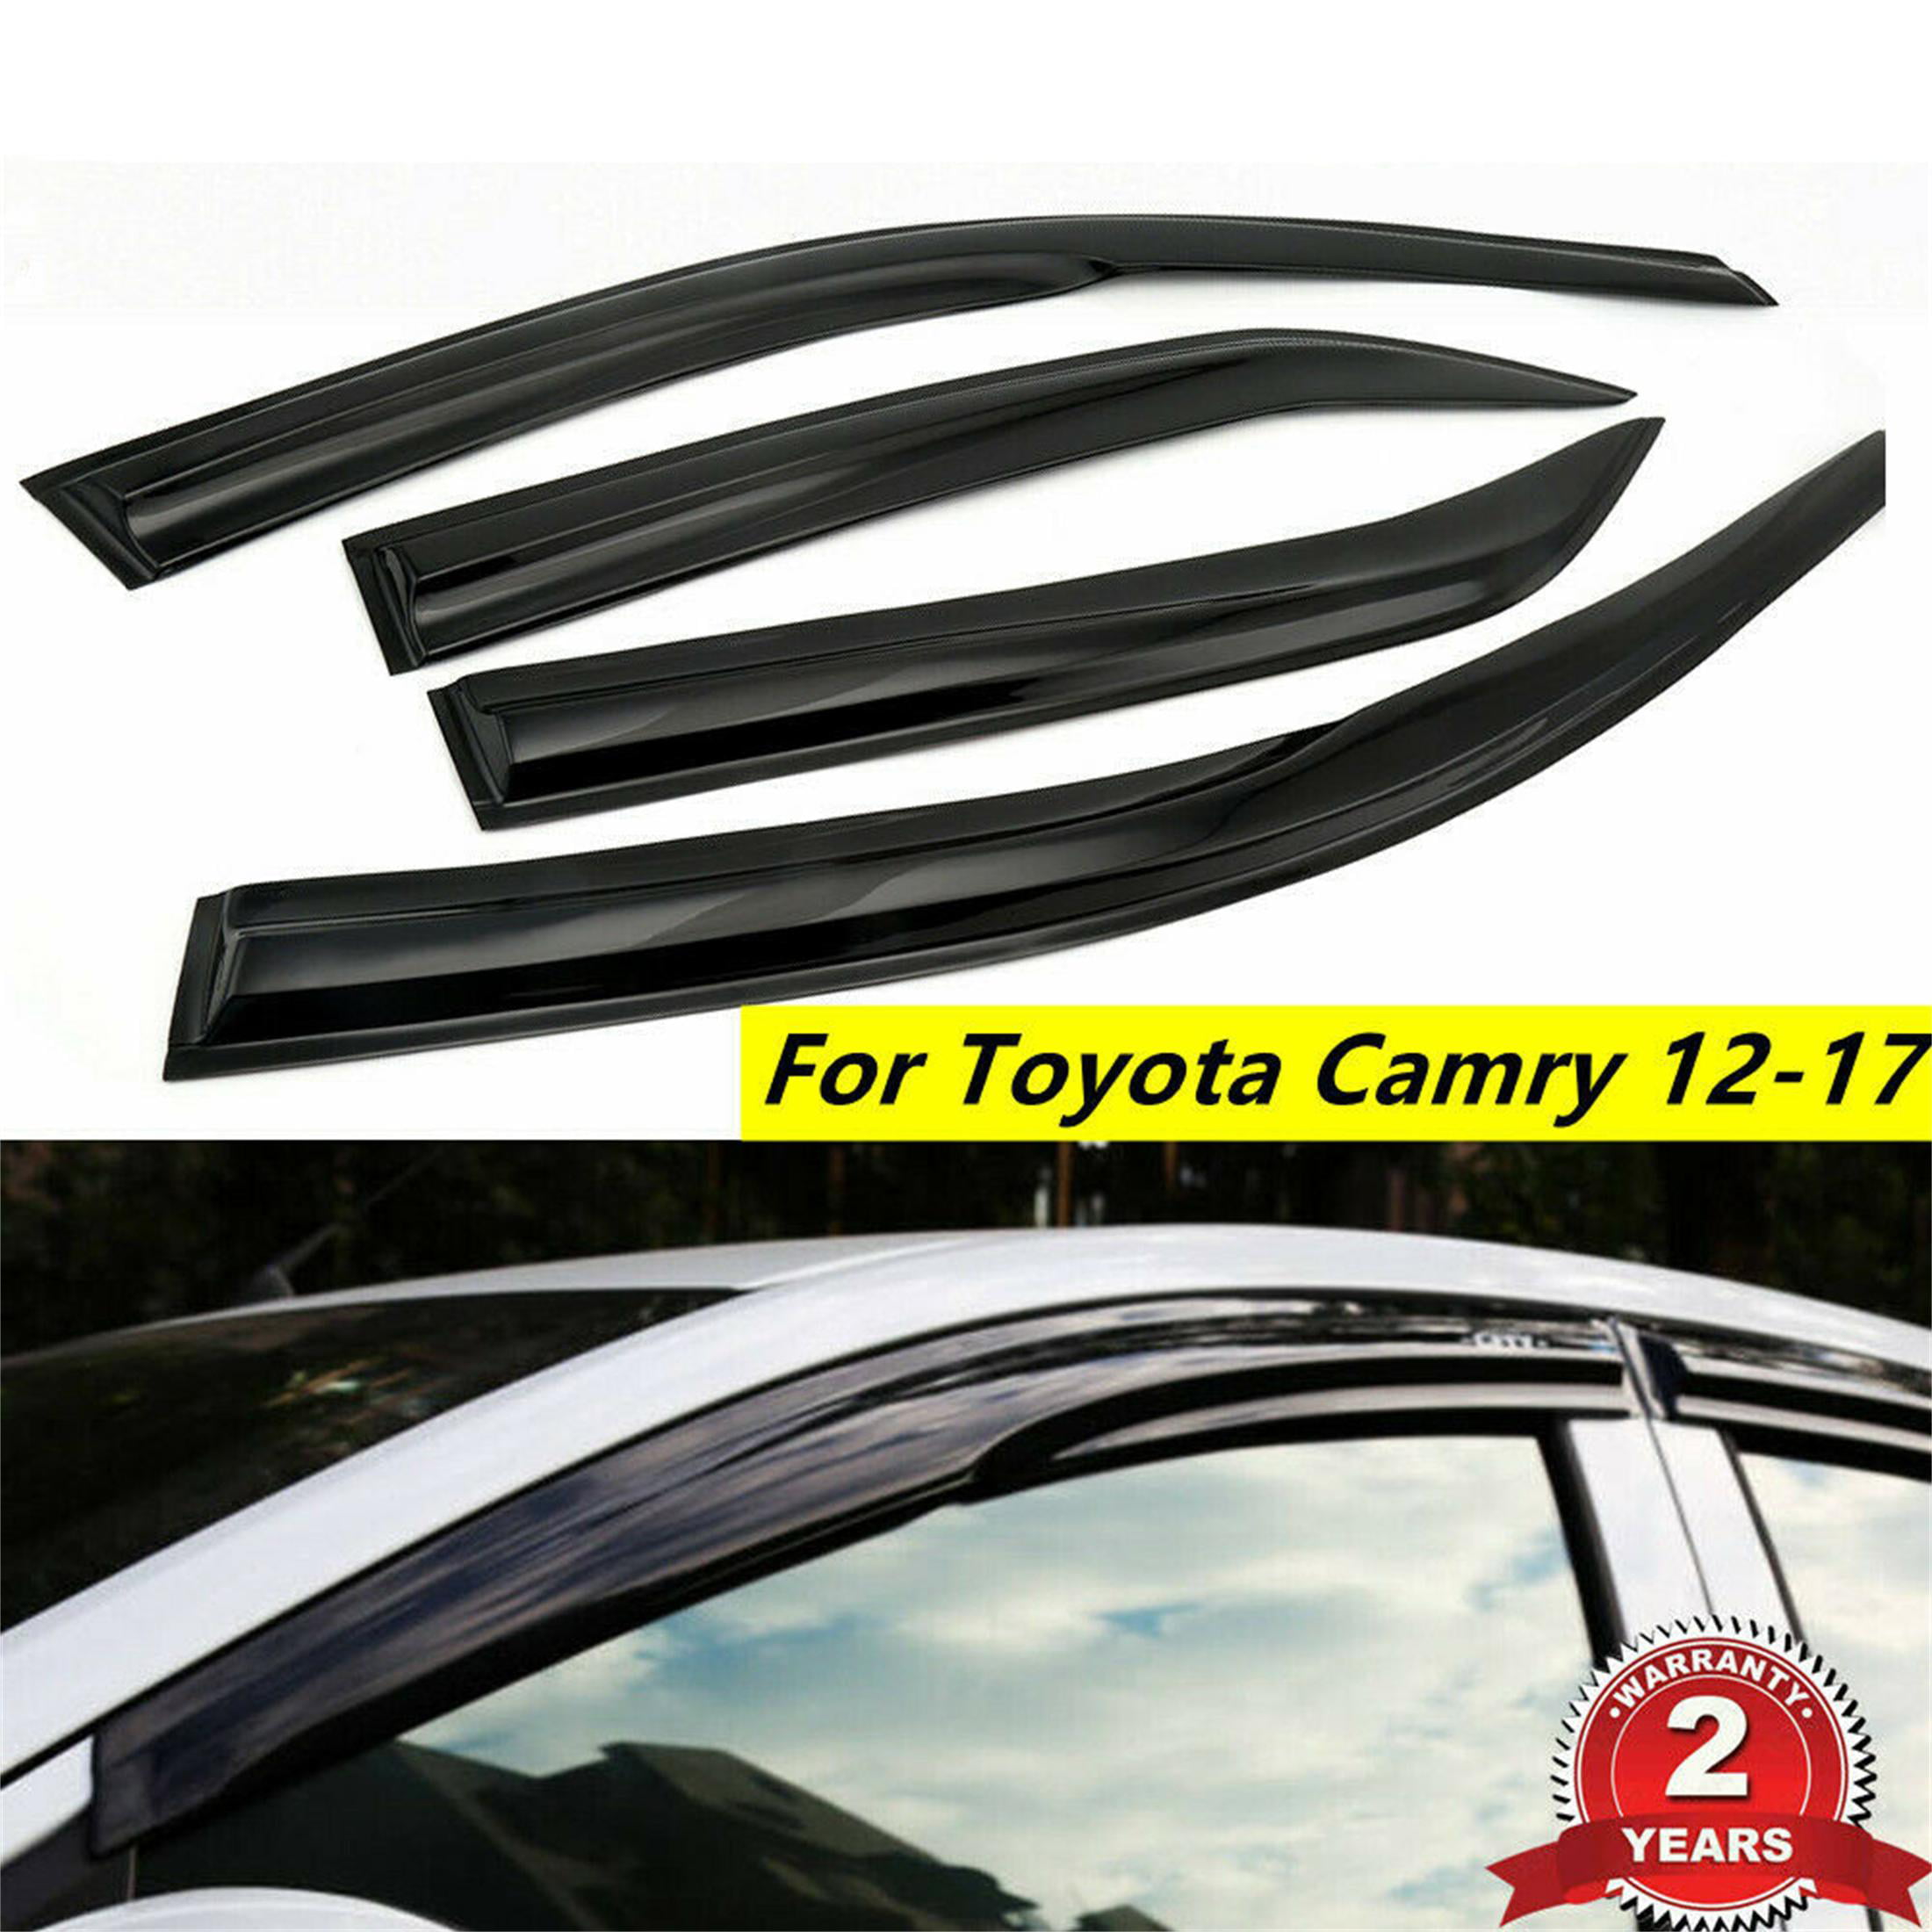 Steel Exterior Fuel Tank Gas Cap Fuel Tank Cover For Toyota Camry Sedan 2012-17